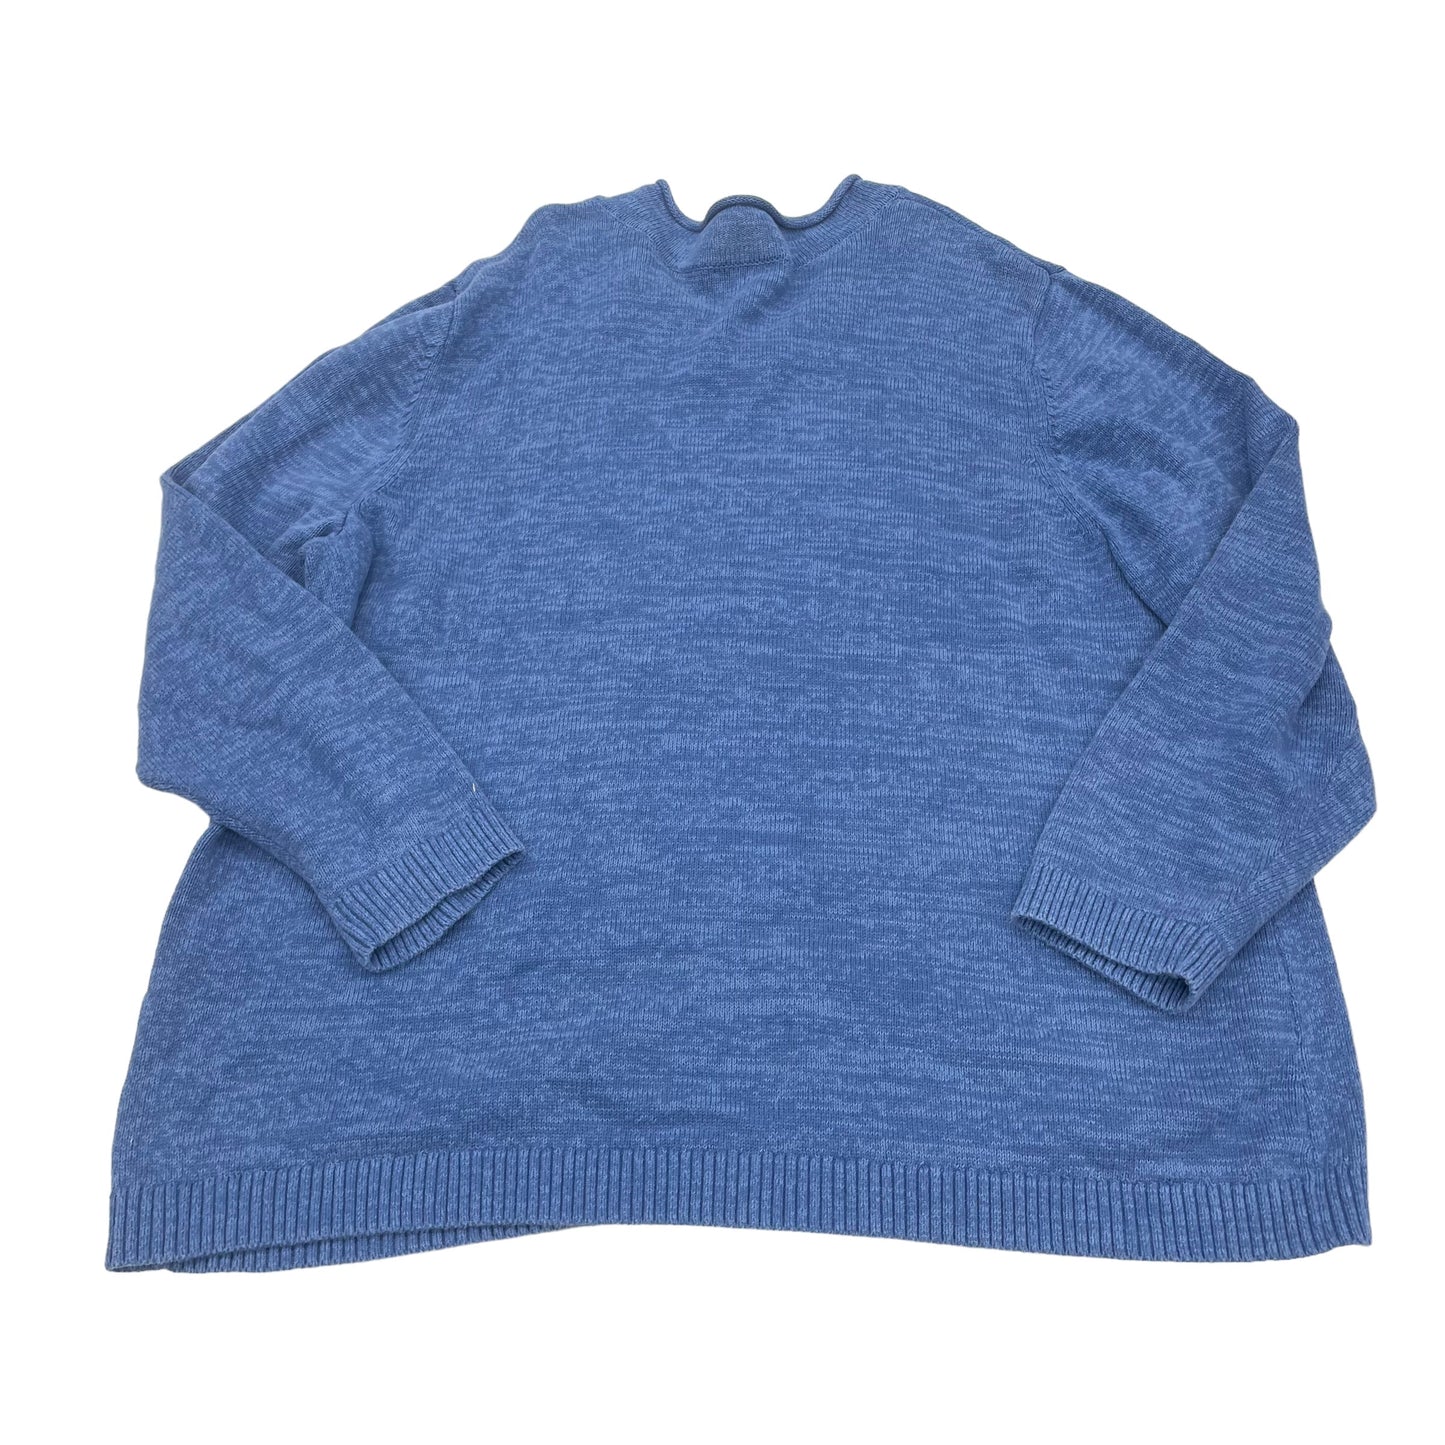 Sweater By Cj Banks  Size: 3x